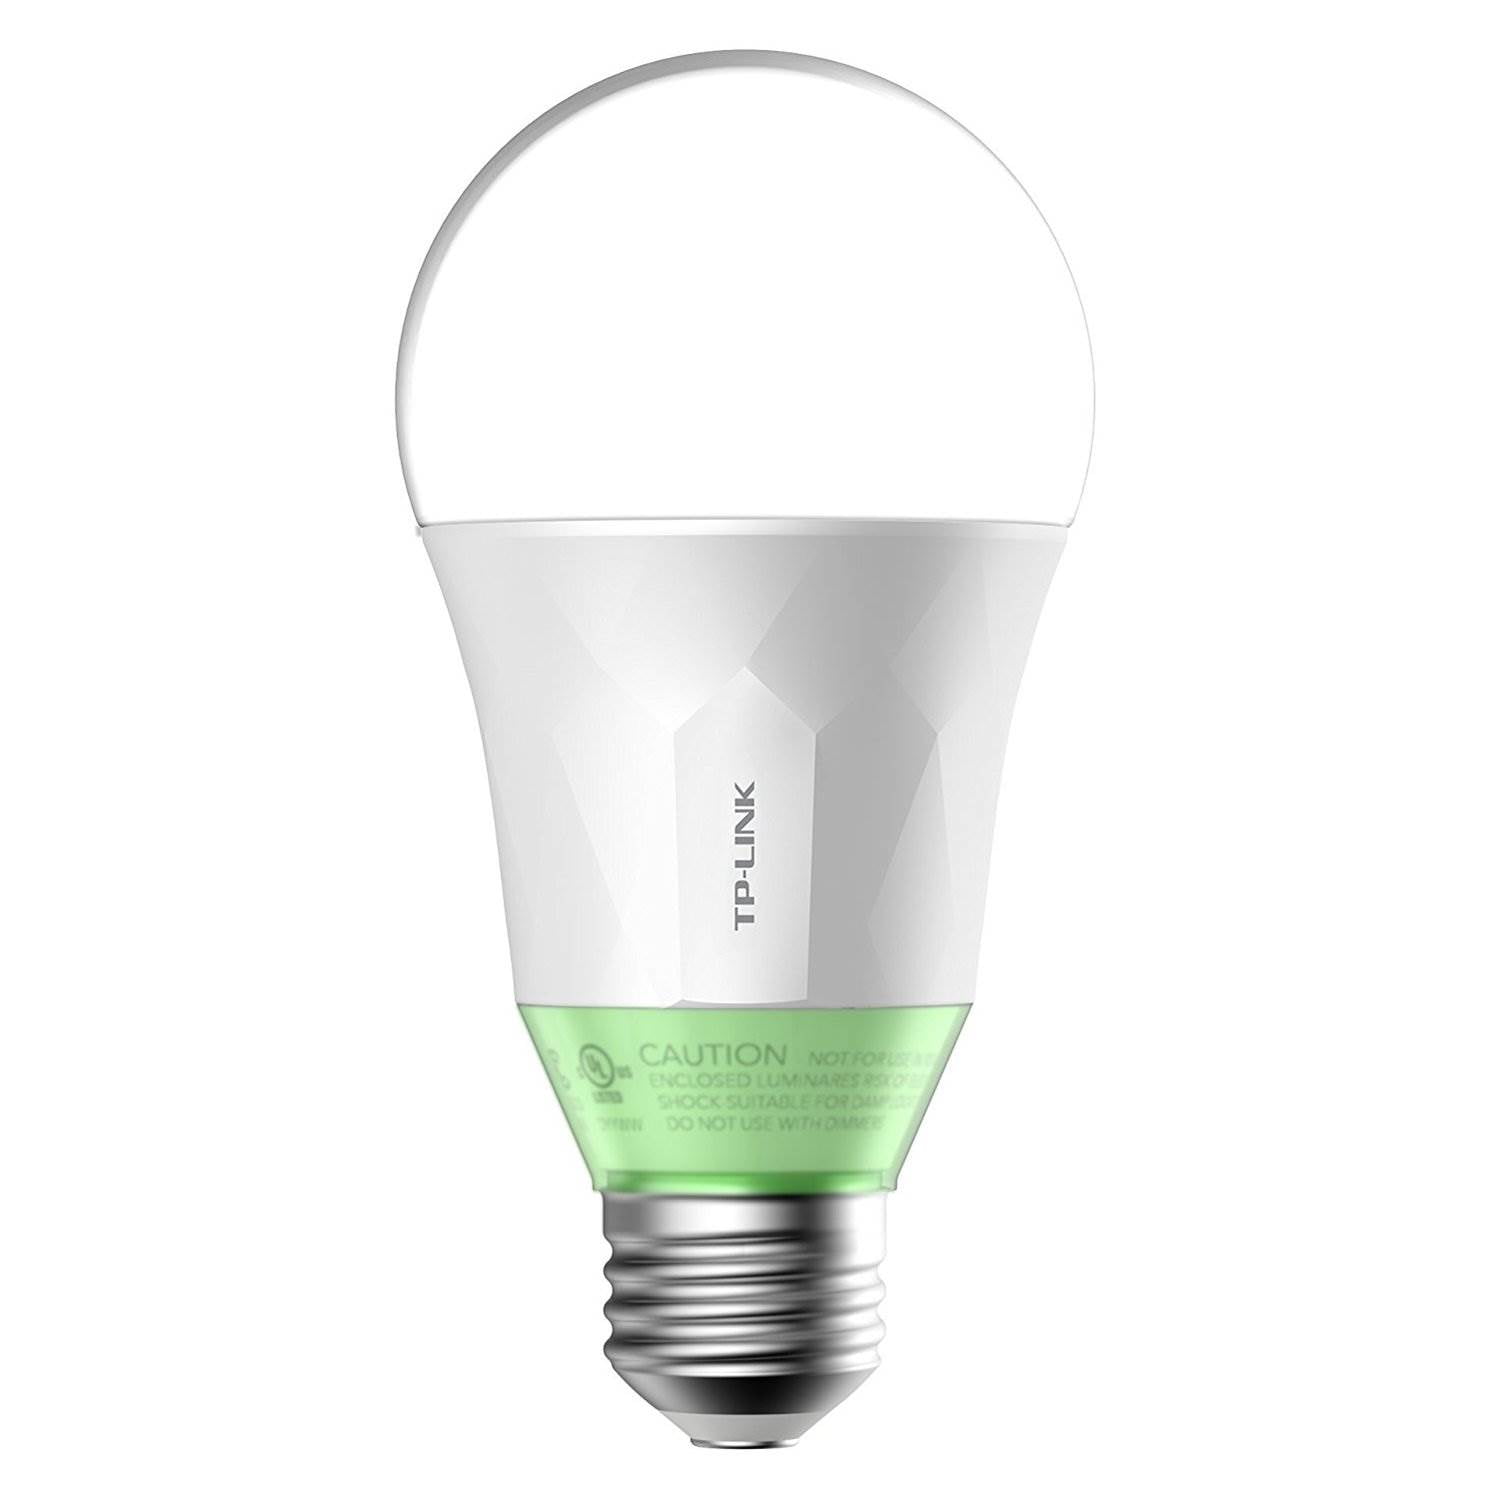 convergentie Leuk vinden Oriëntatiepunt TP-Link 60W Energy Saving Smart Wi-Fi LED Light Bulb with Dimmable Light |  LB110 - Walmart.com